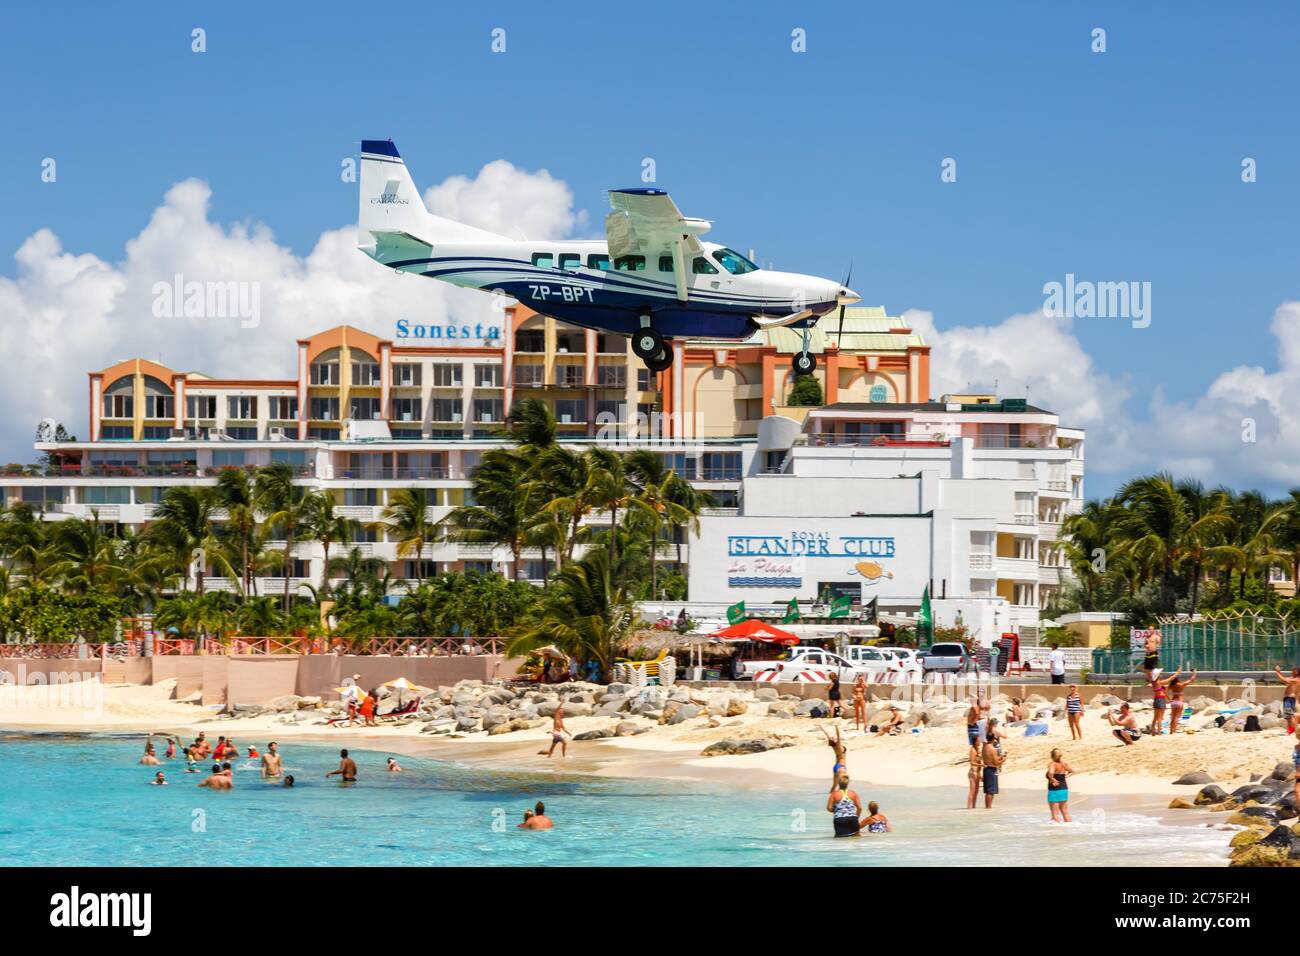 Sint Maarten - September 16, 2016: Private Cessna 208 airplane at Sint Maarten airport (SXM) in the Caribbean. Stock Photo